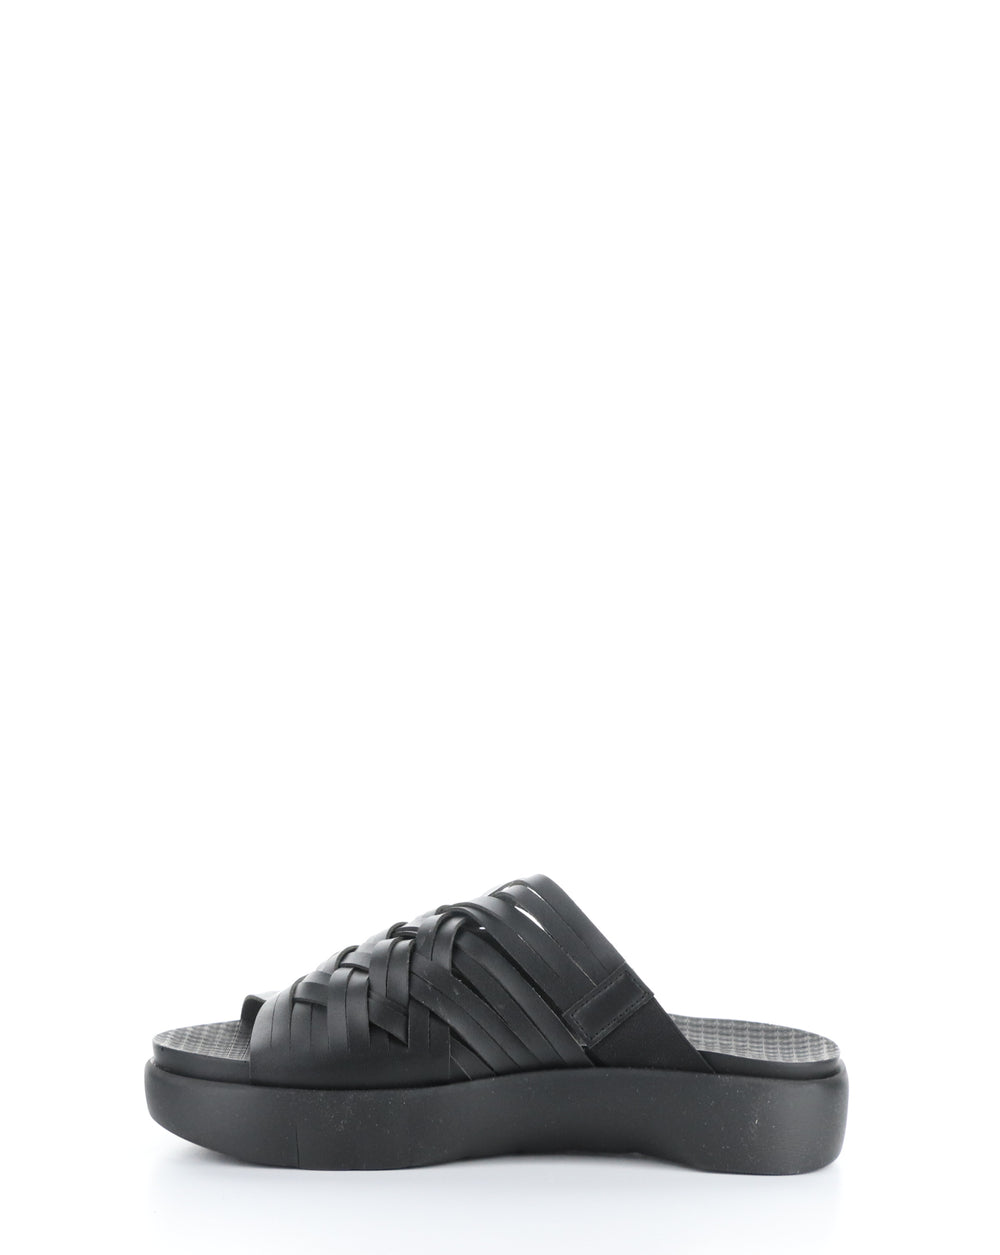 RISED BLACK Slip-on Sandals